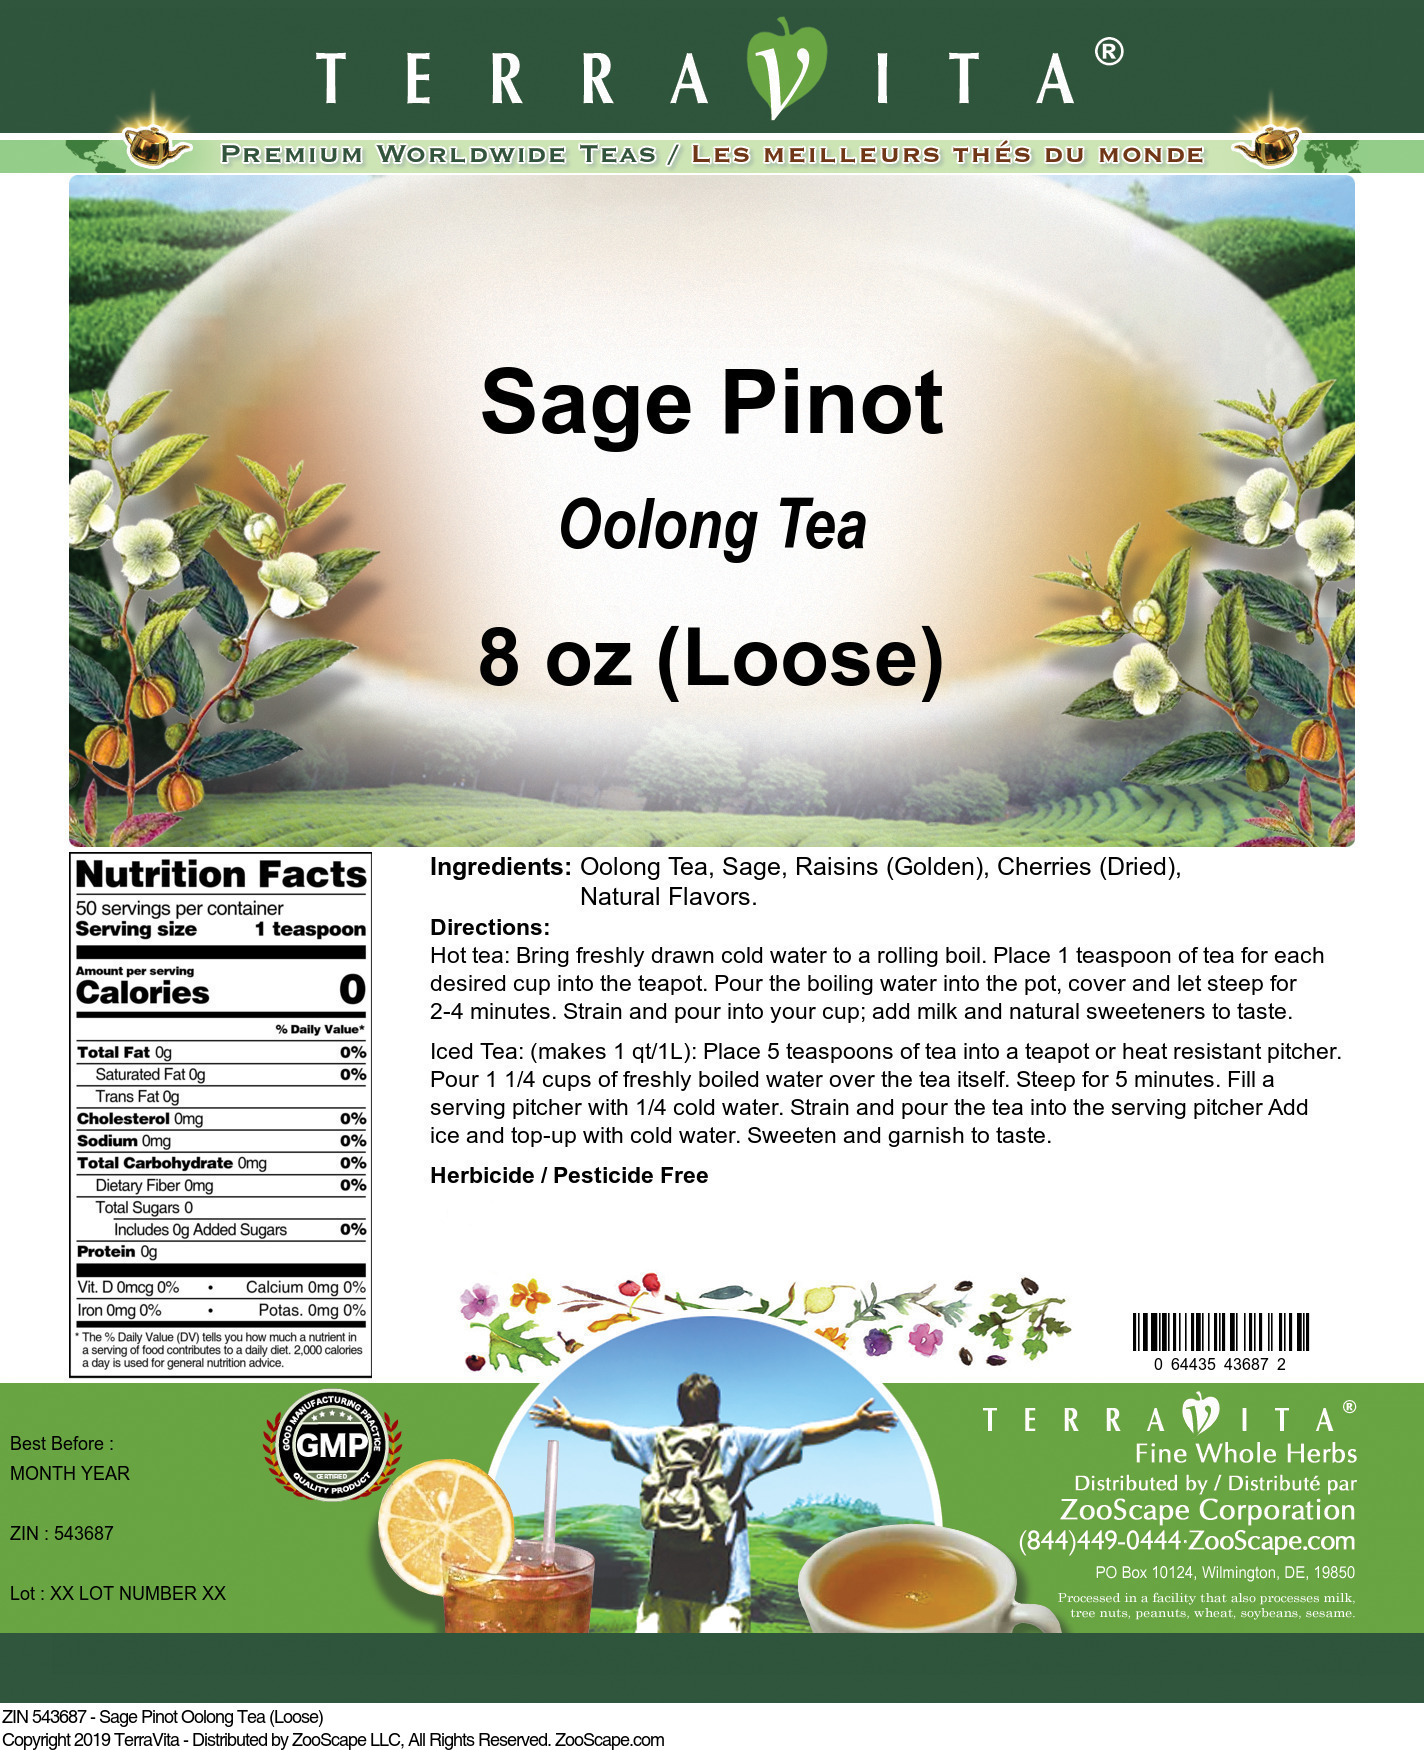 Sage Pinot Oolong Tea (Loose) - Label